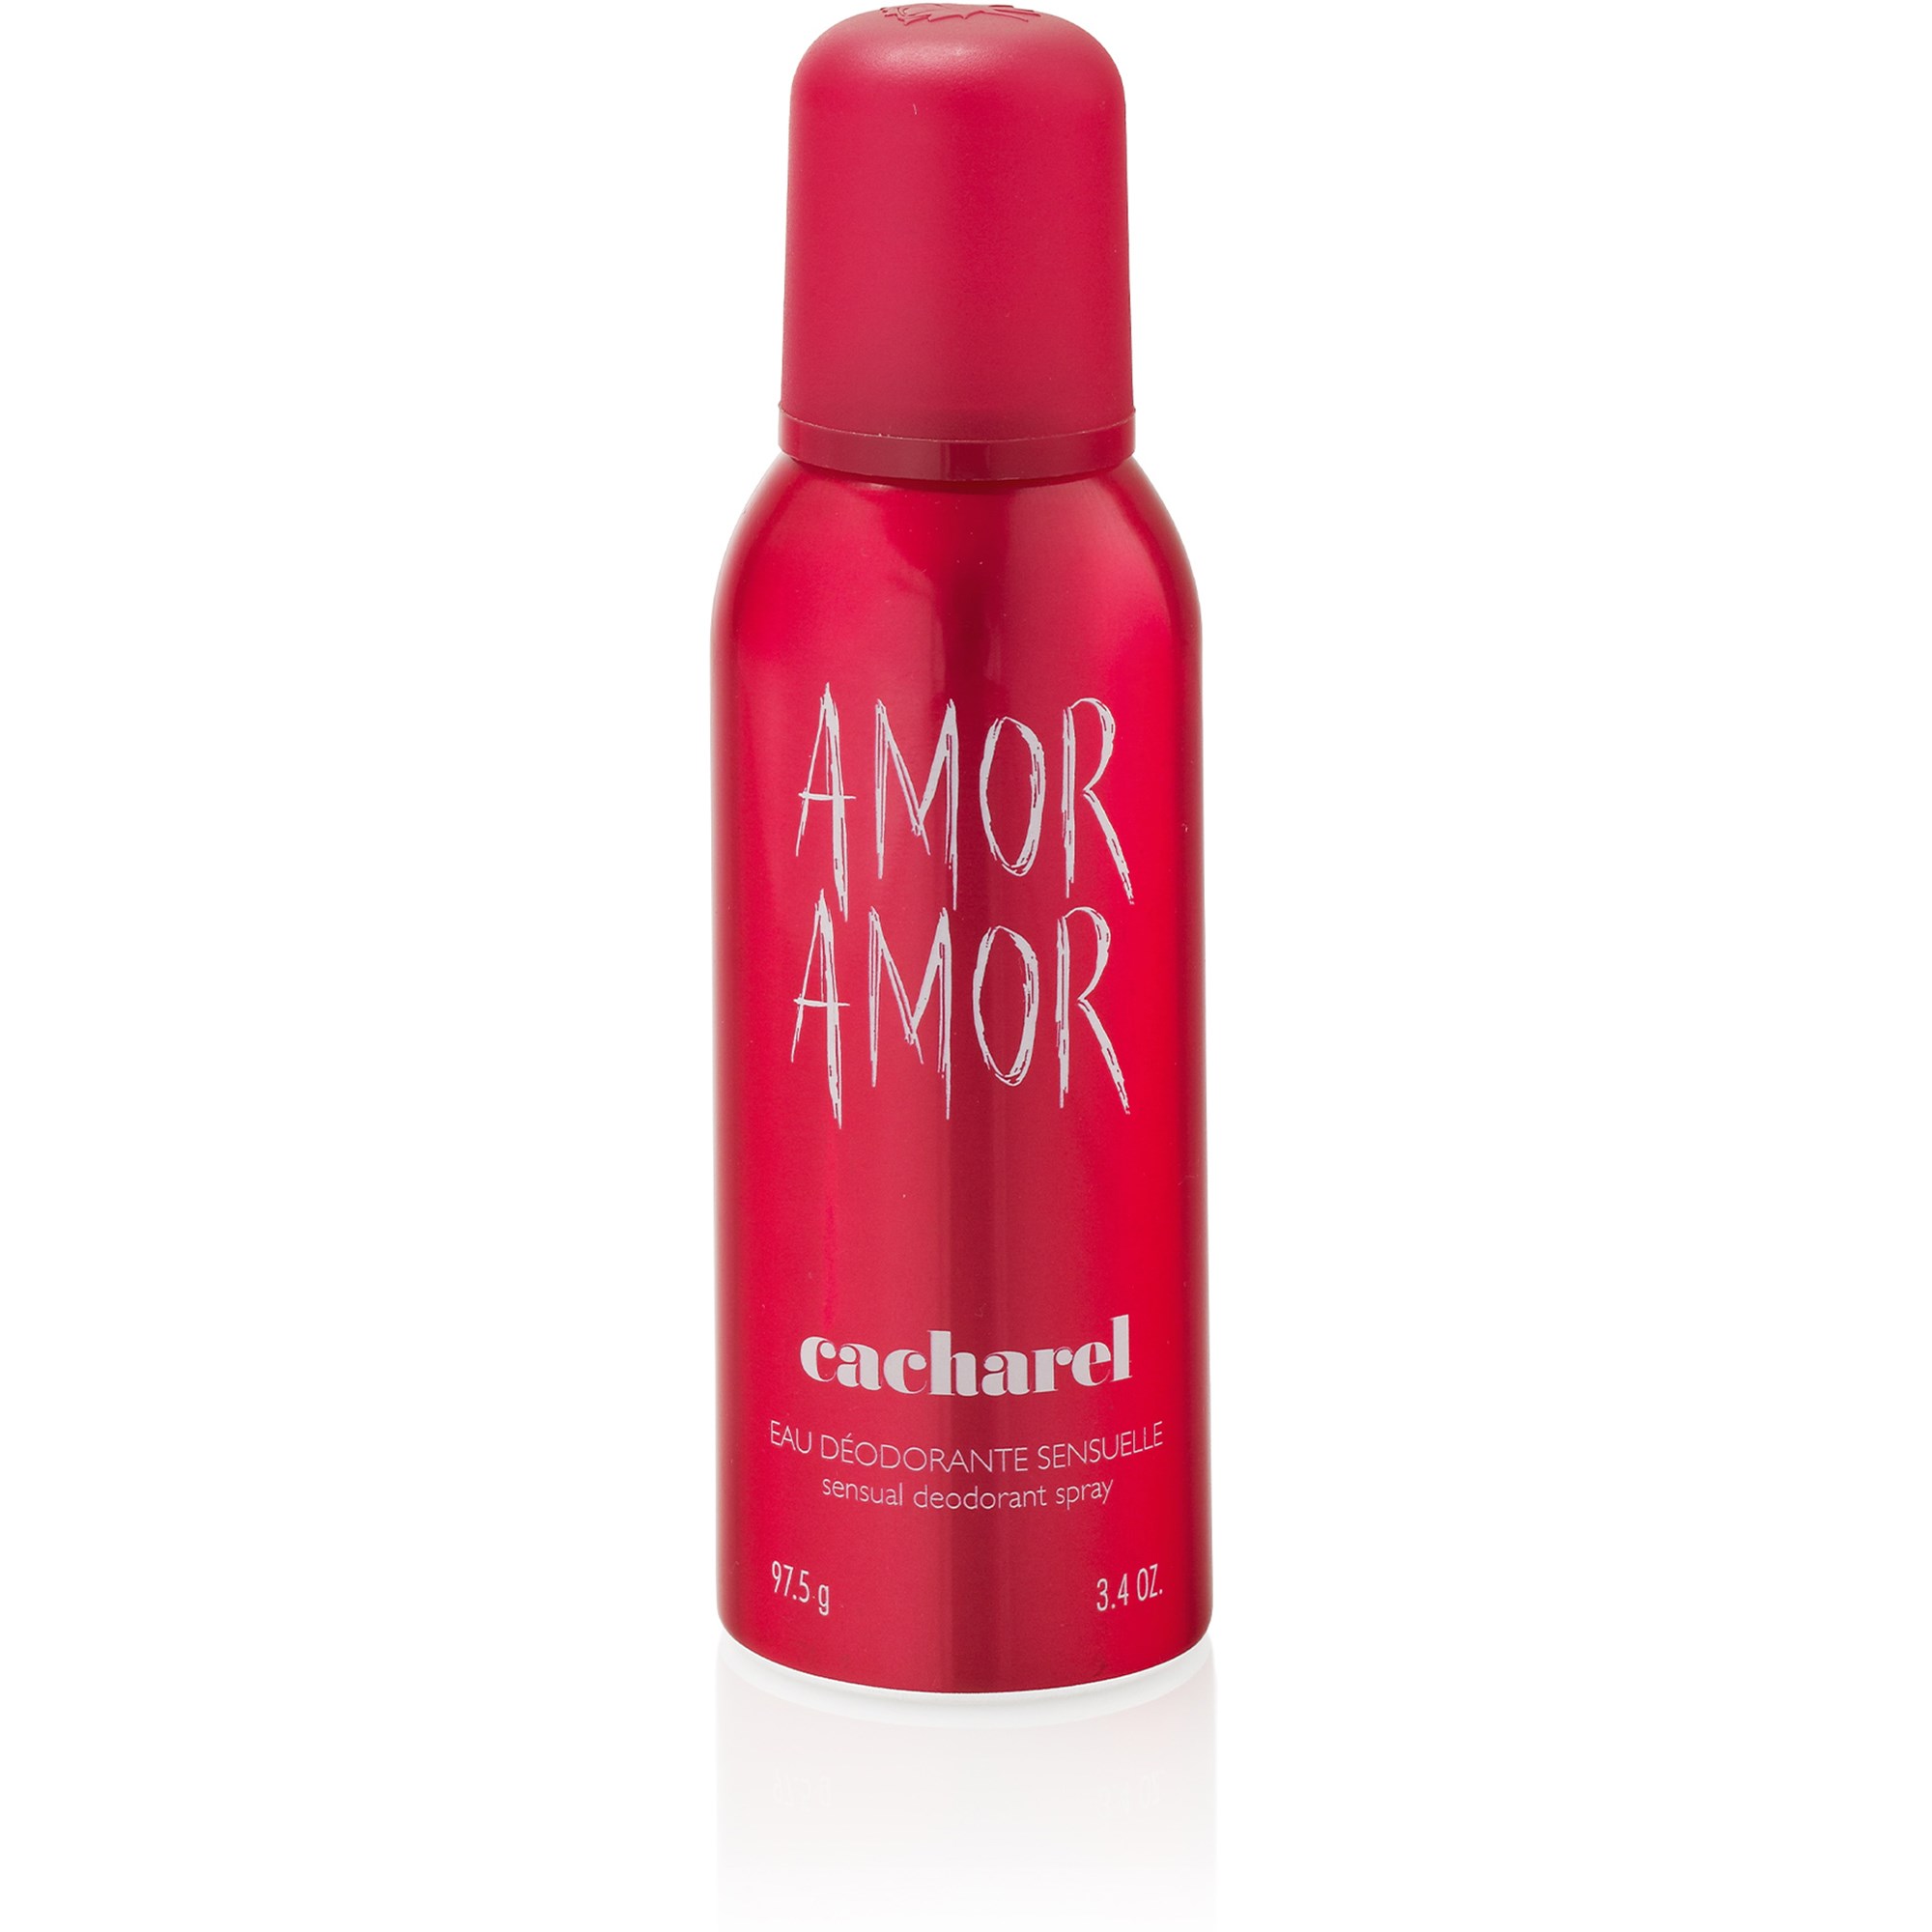 Zdjęcia - Dezodorant Cacharel Amor Amor Amor Amor Deodorant Spray 150ml -  w 